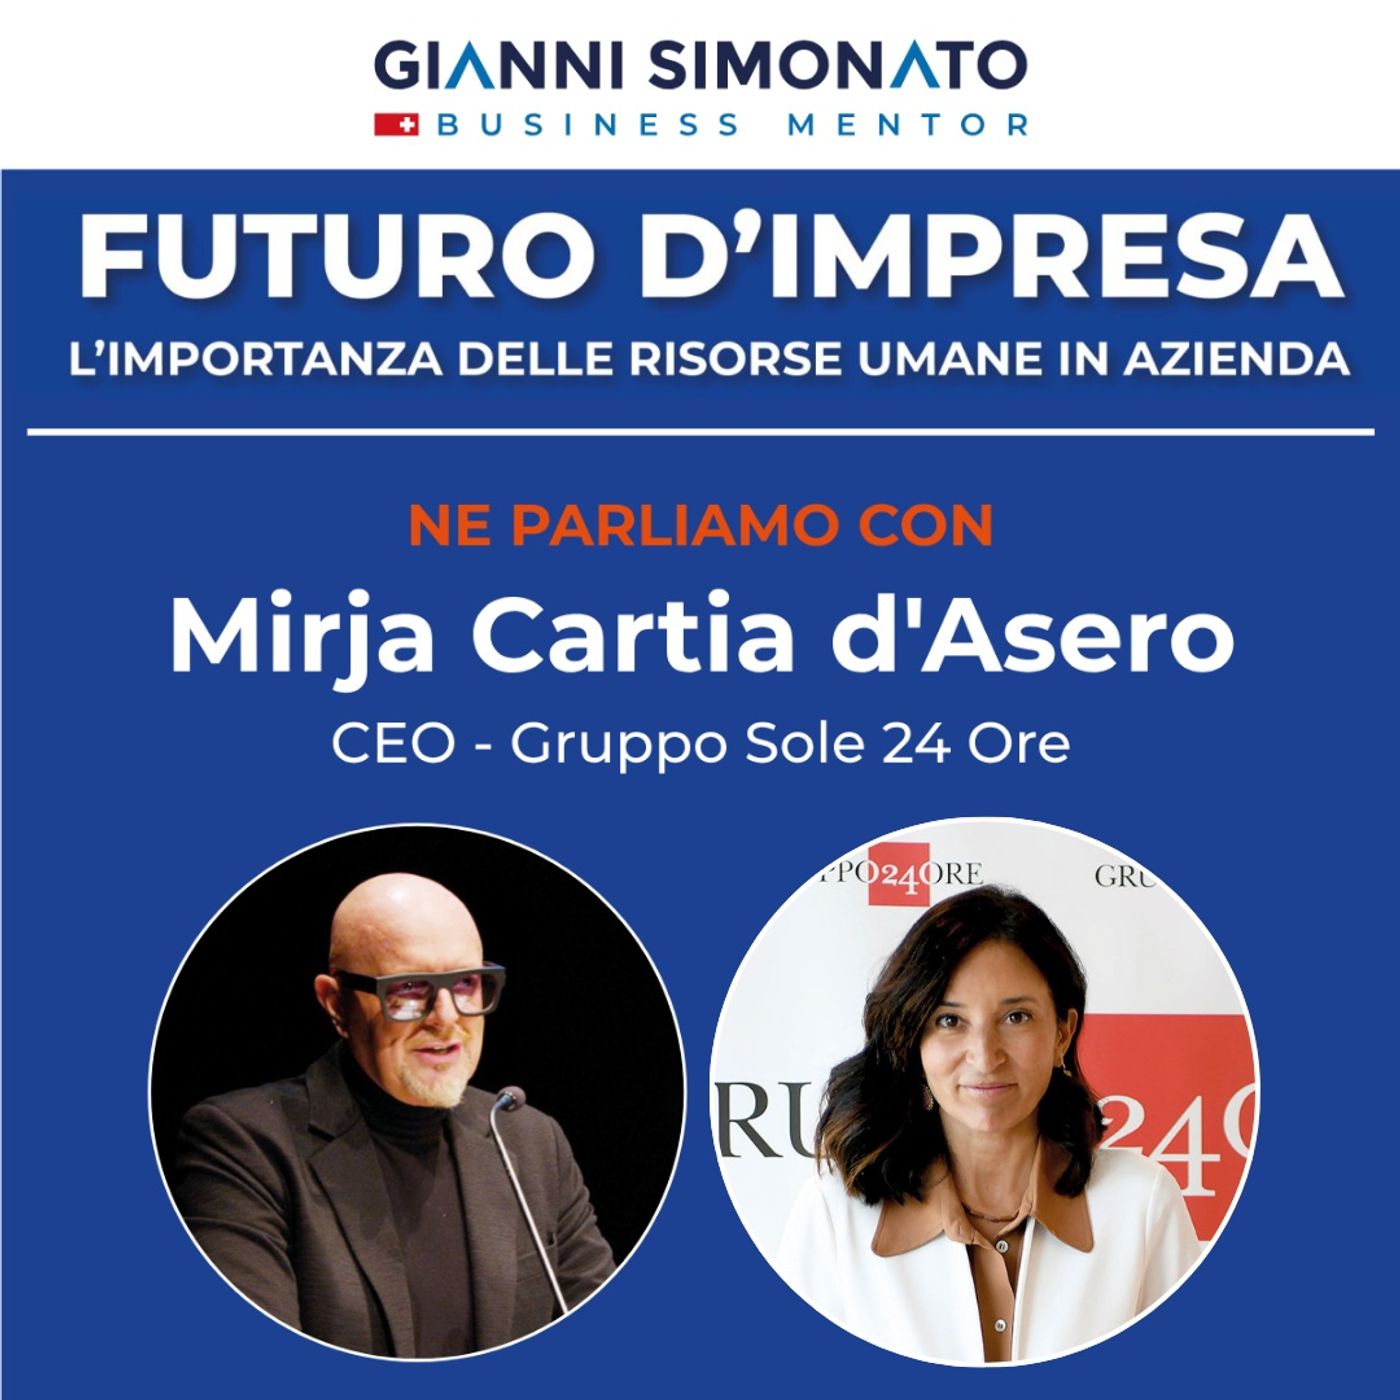 Futuro d'Impresa ne parliamo con: Mirja Cartia d'Asero - CEO Gruppo Sole 24 Ore e Gianni Simonato CEO Mentor